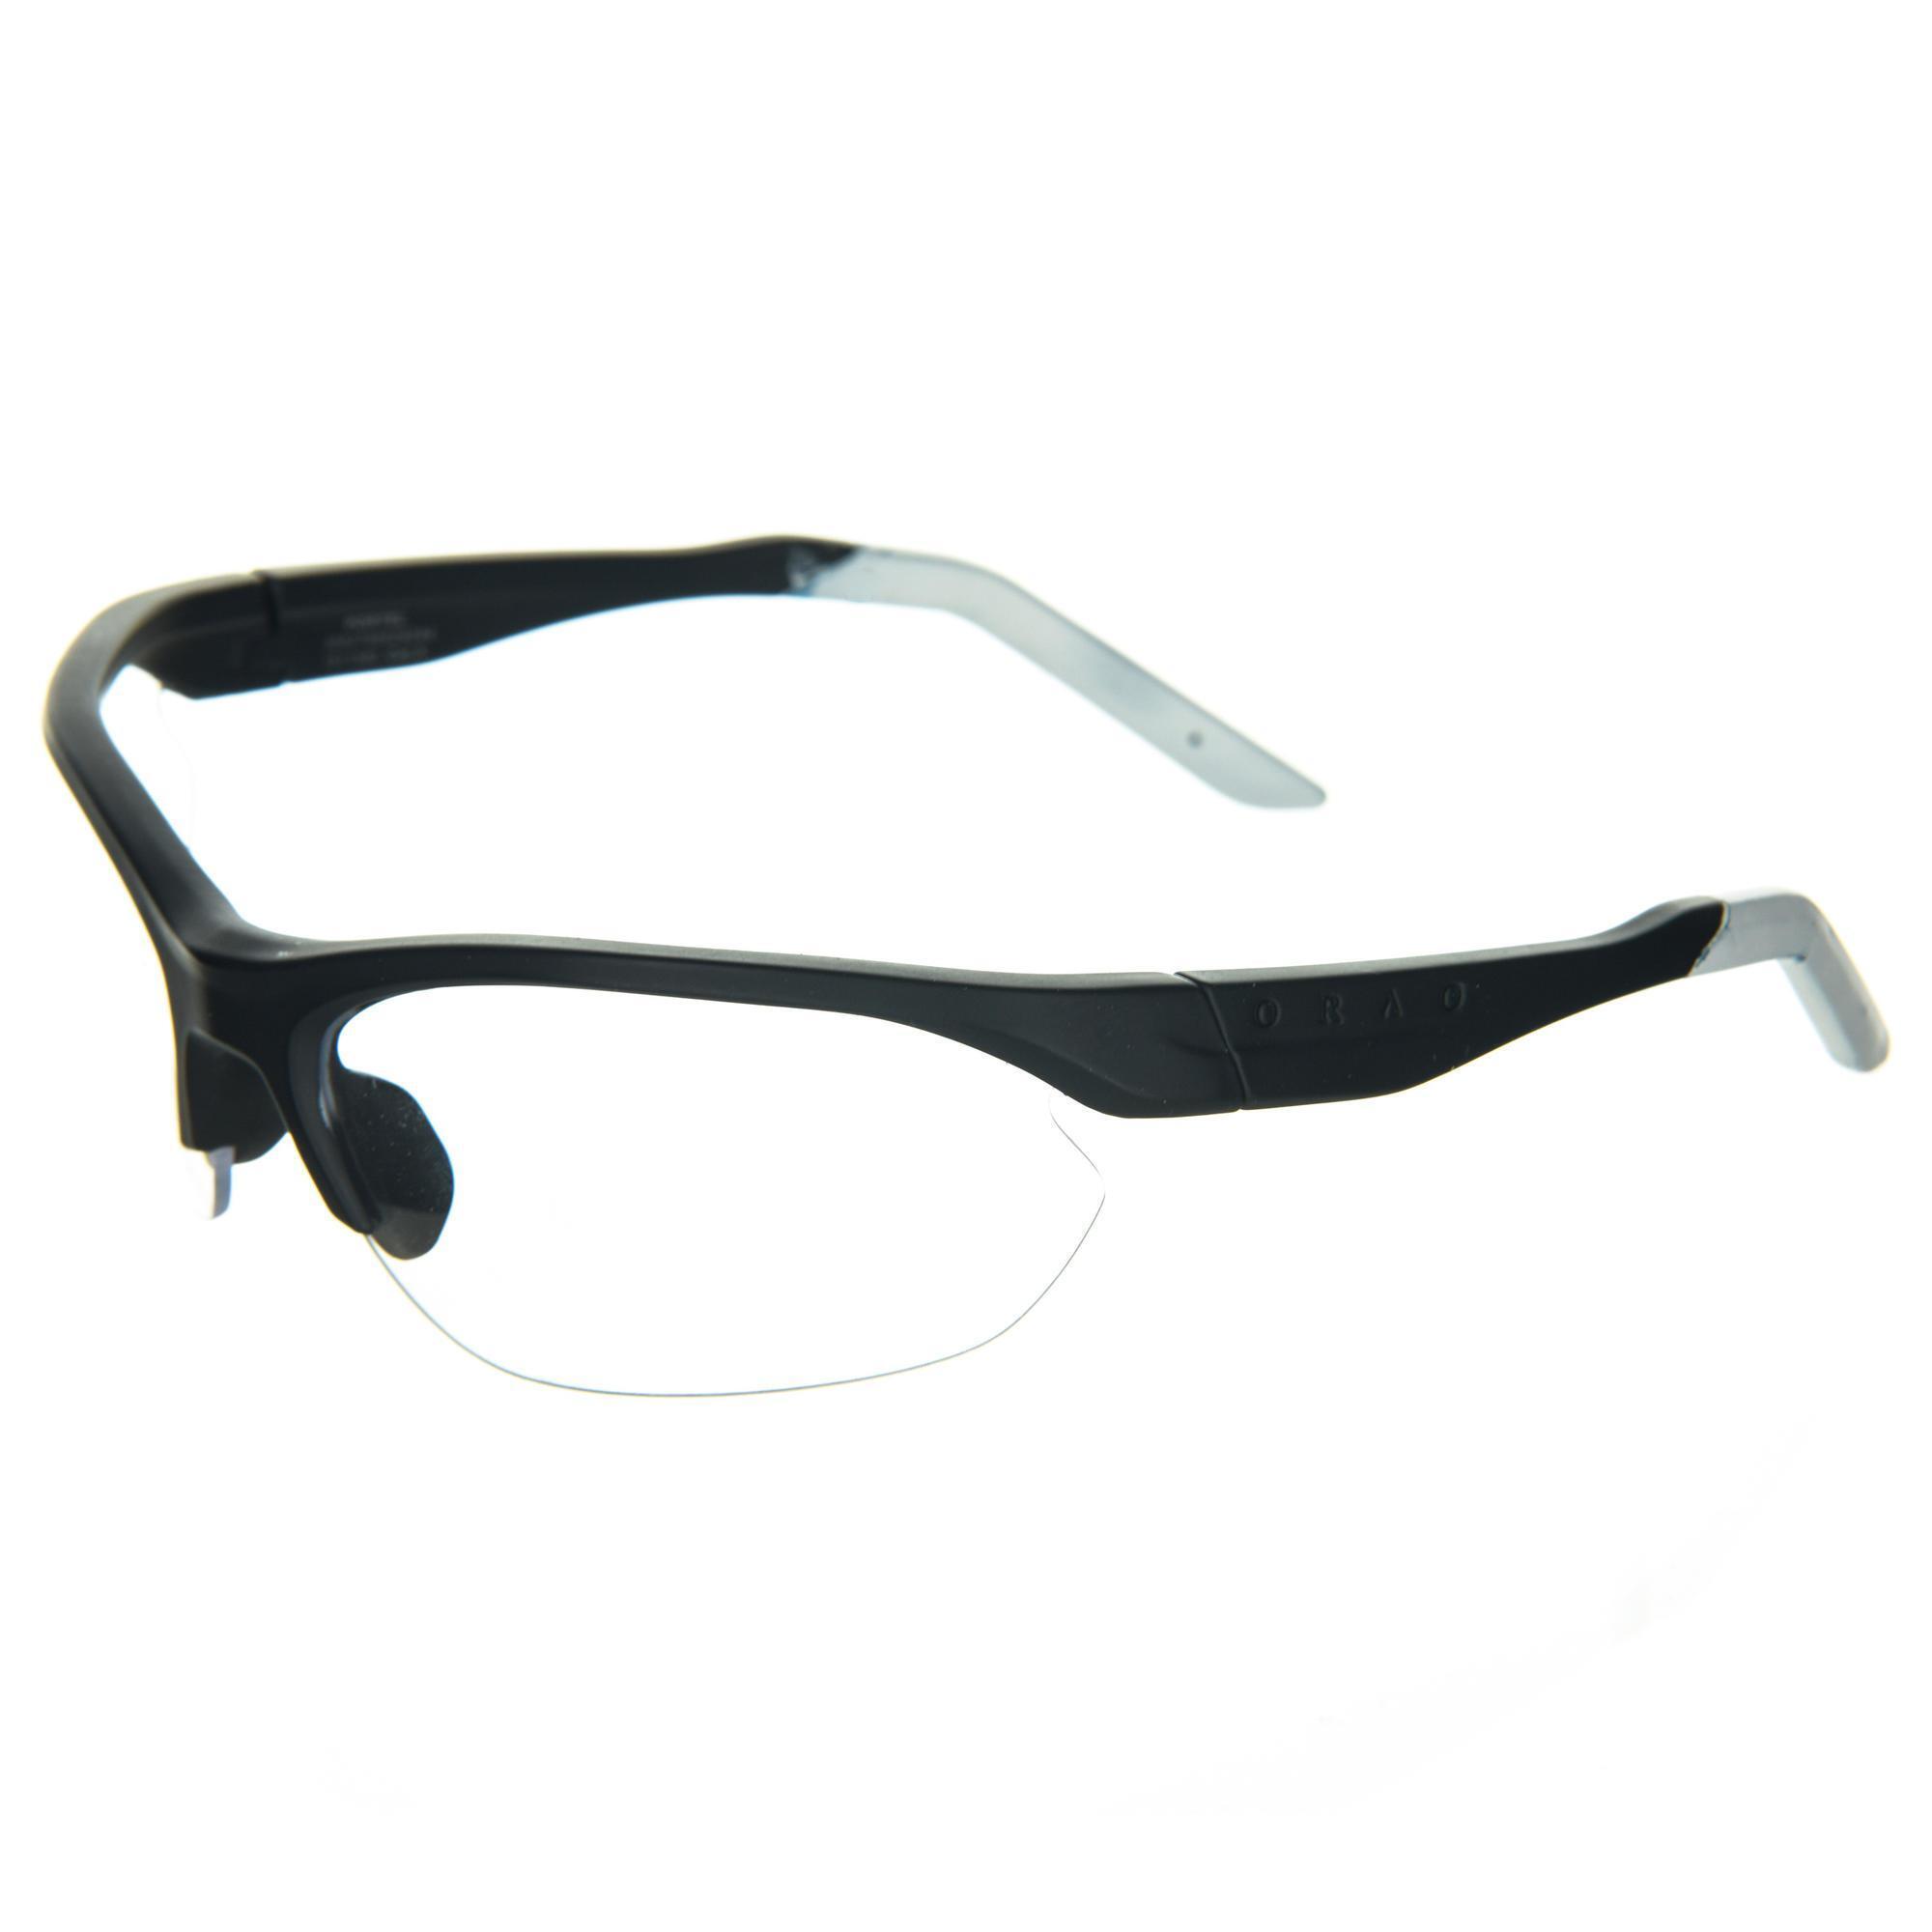 Squash Wide Face Glasses SPG 100 - Size L 3/6